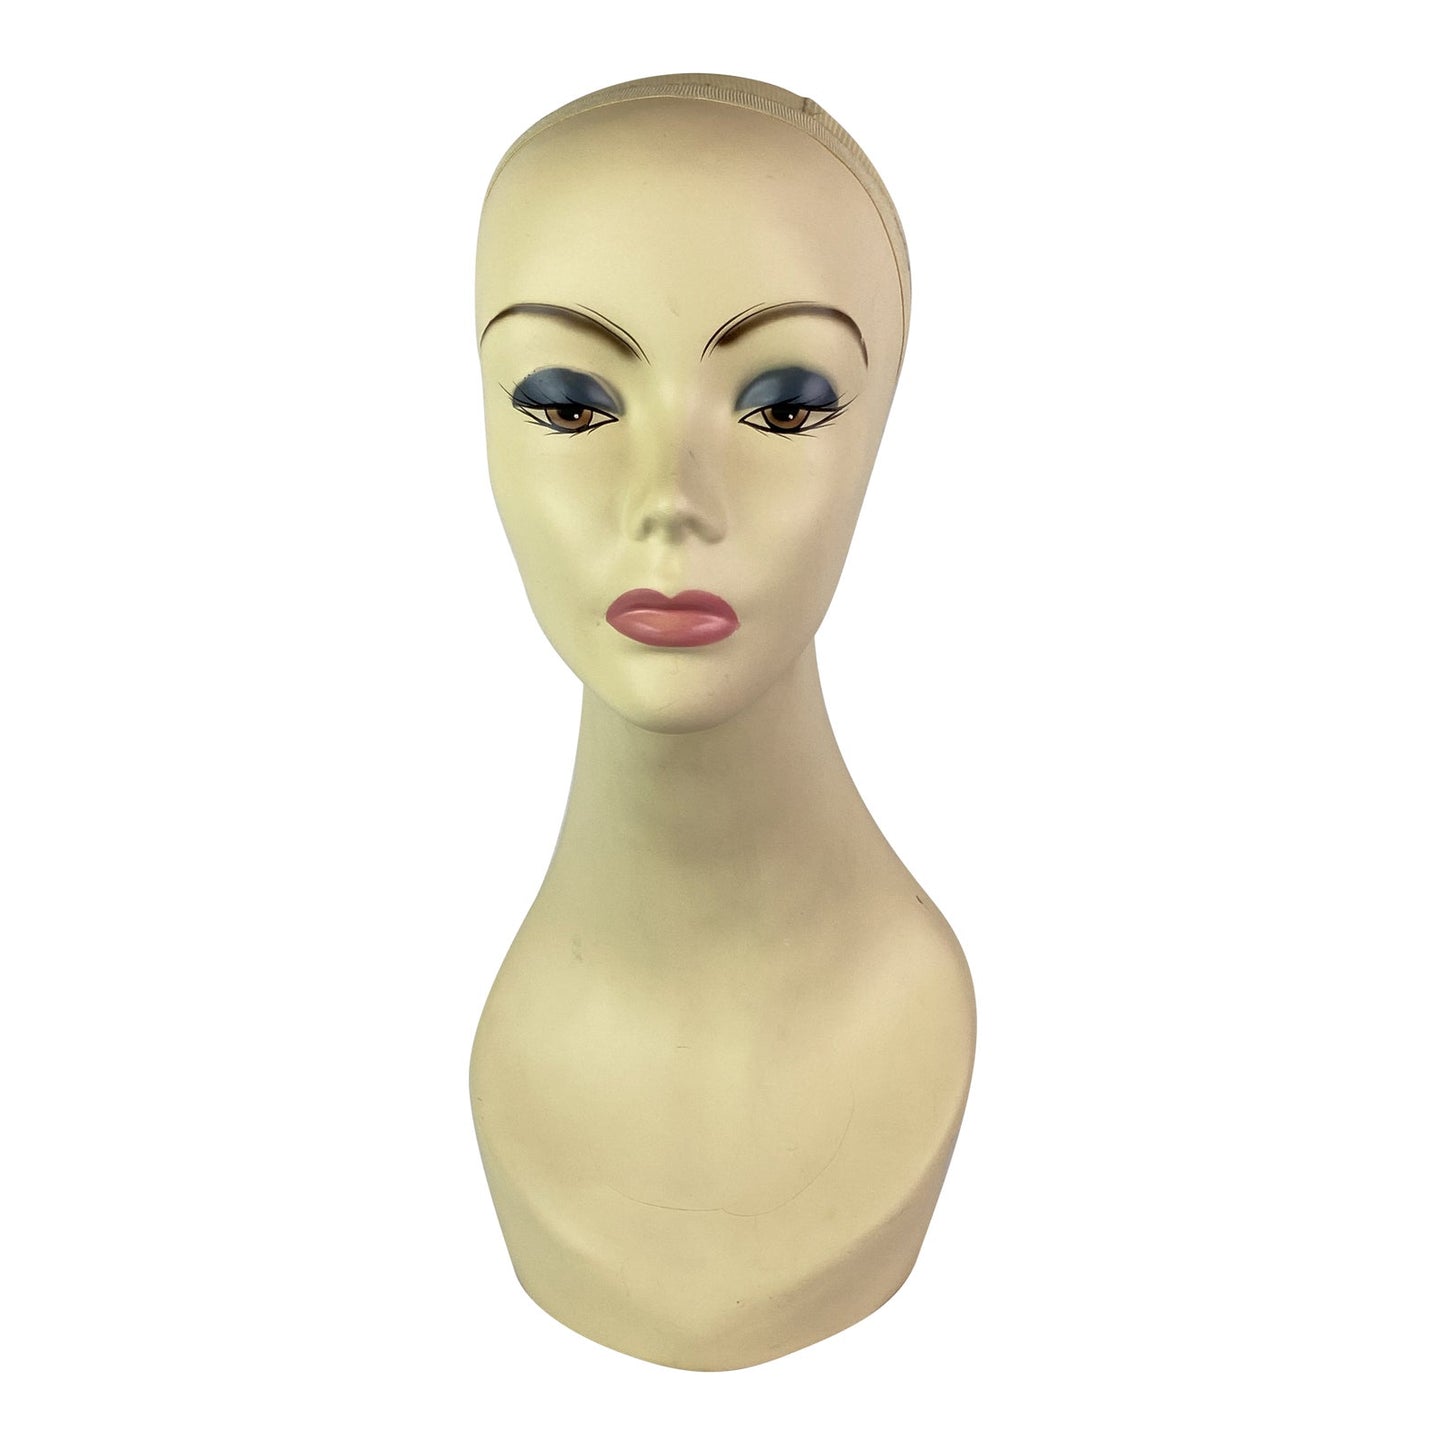 Vintage 1950s Model Mannequin Makeup Bust Head